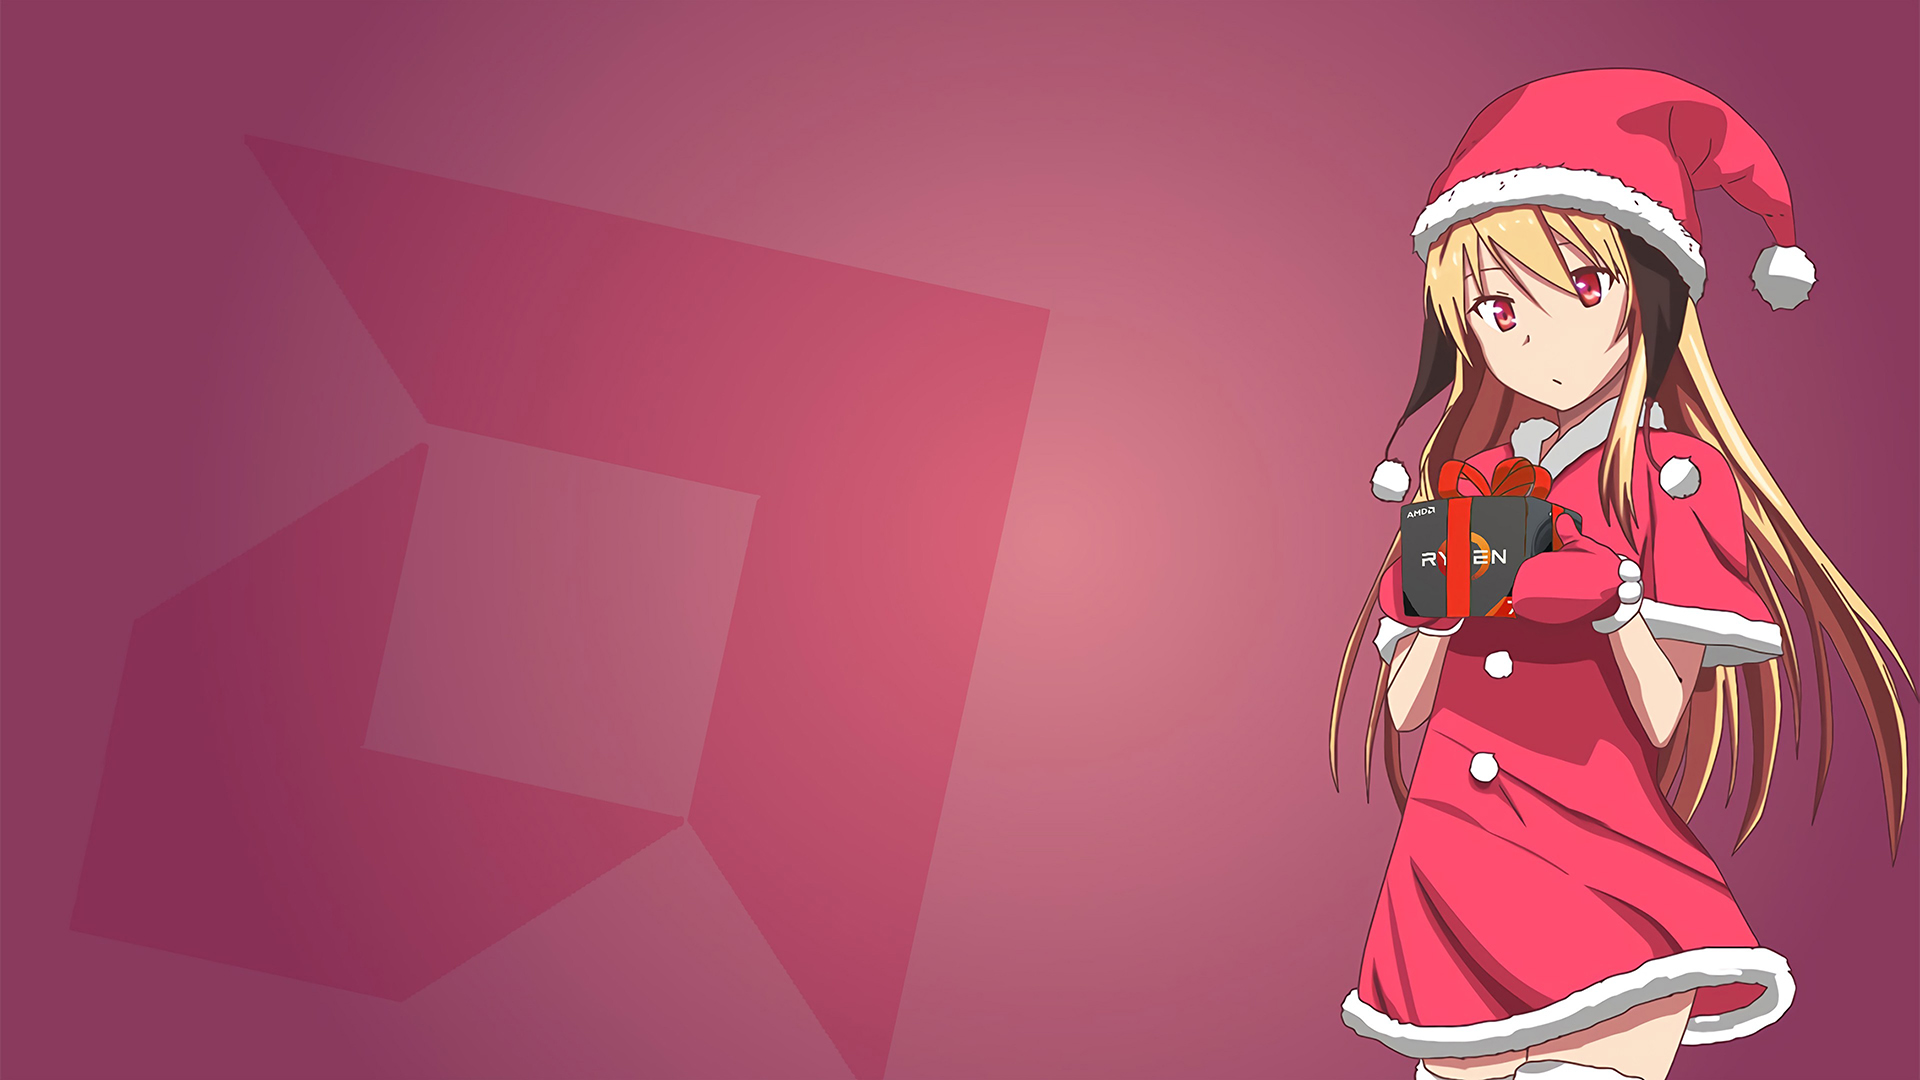 Anime 1920x1080 anime girls anime Sakurasou no Pet na Kanojo Shiina Mashiro Christmas Santa hats Santa girl presents RYZEN AMD